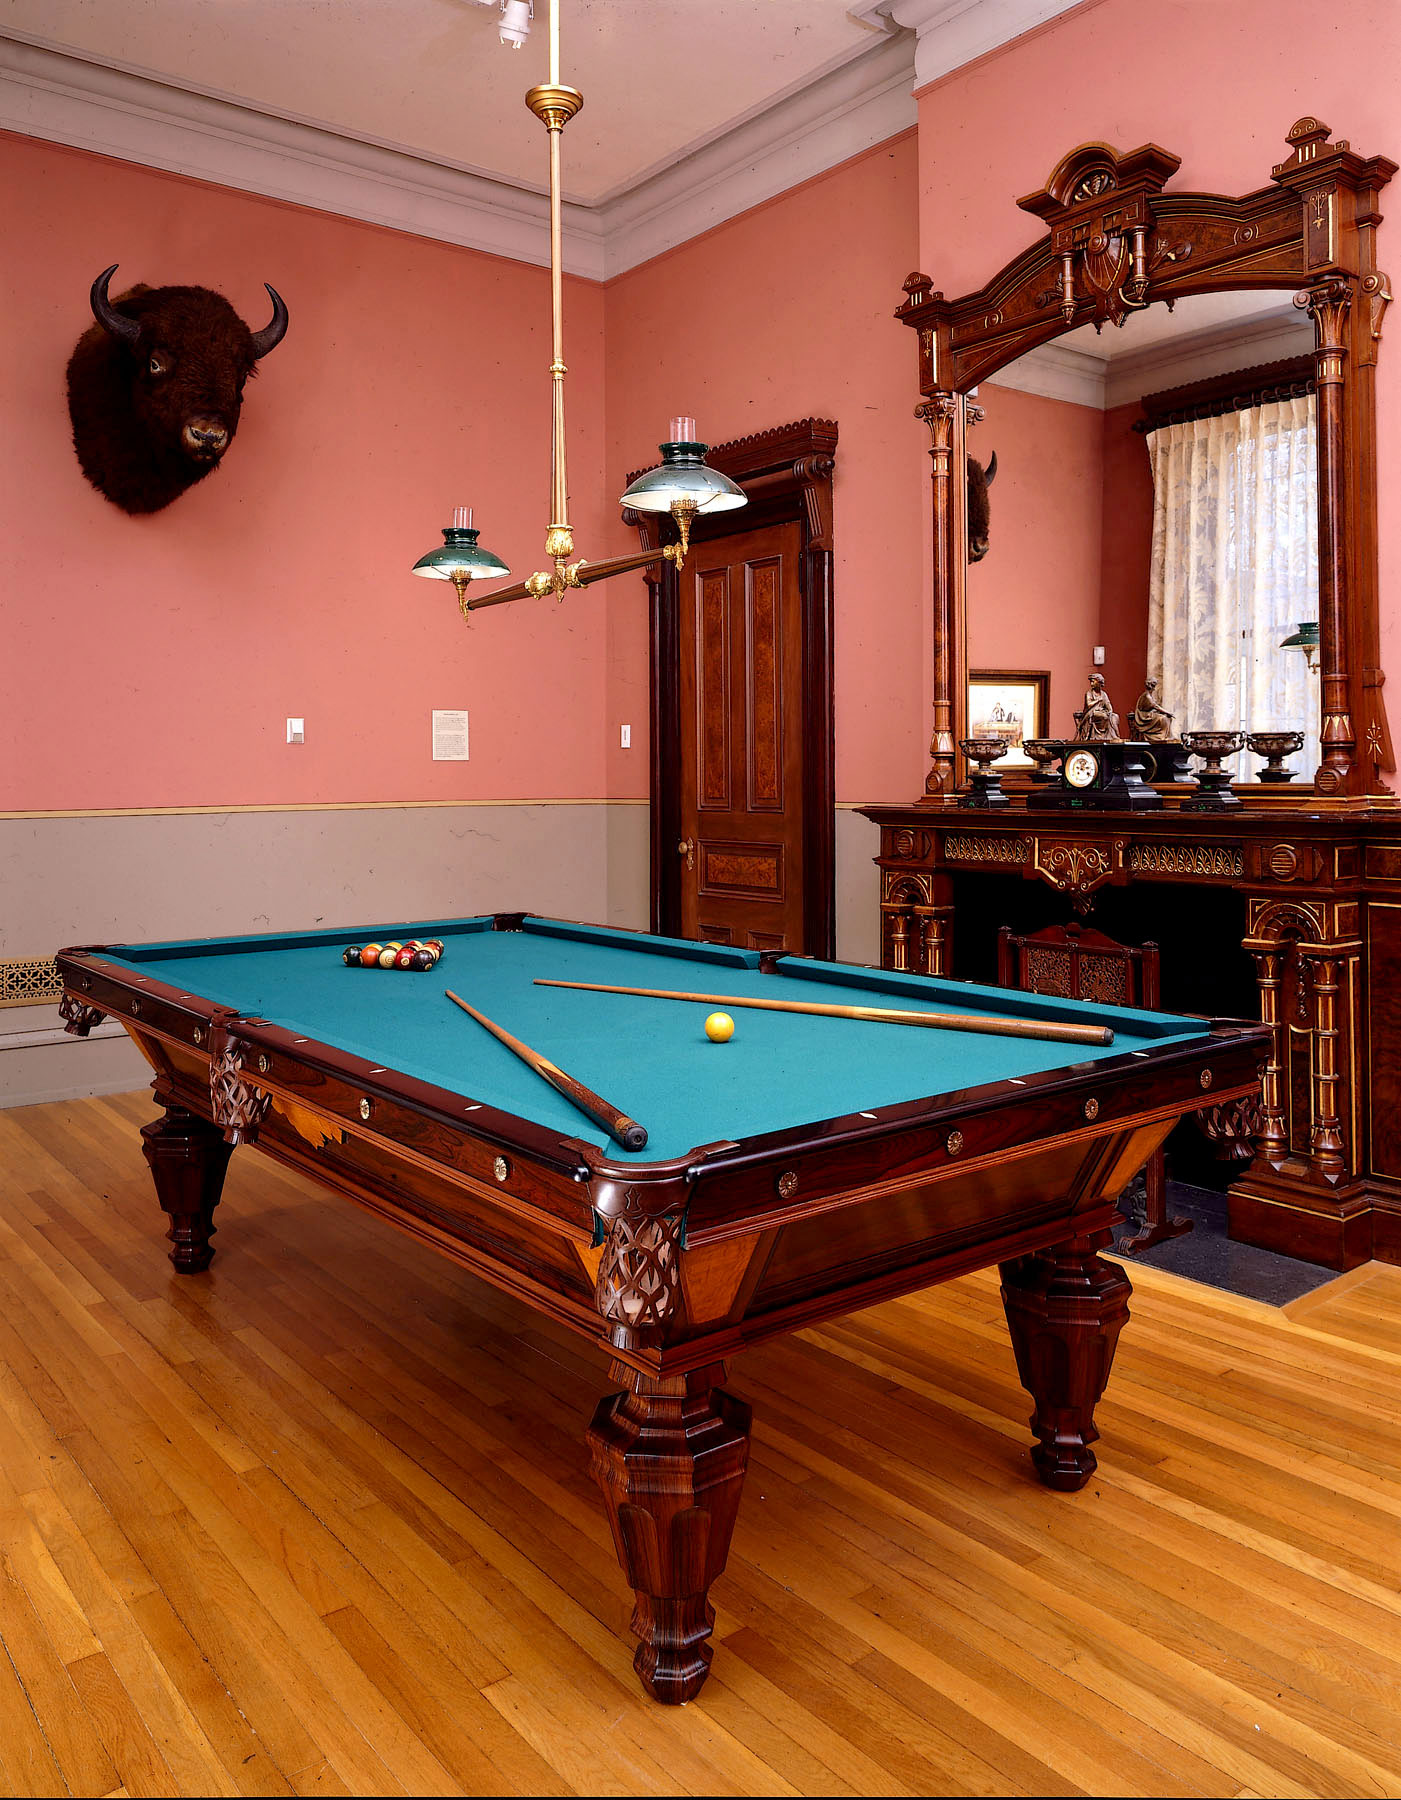 on-view-glenview-billiard-room